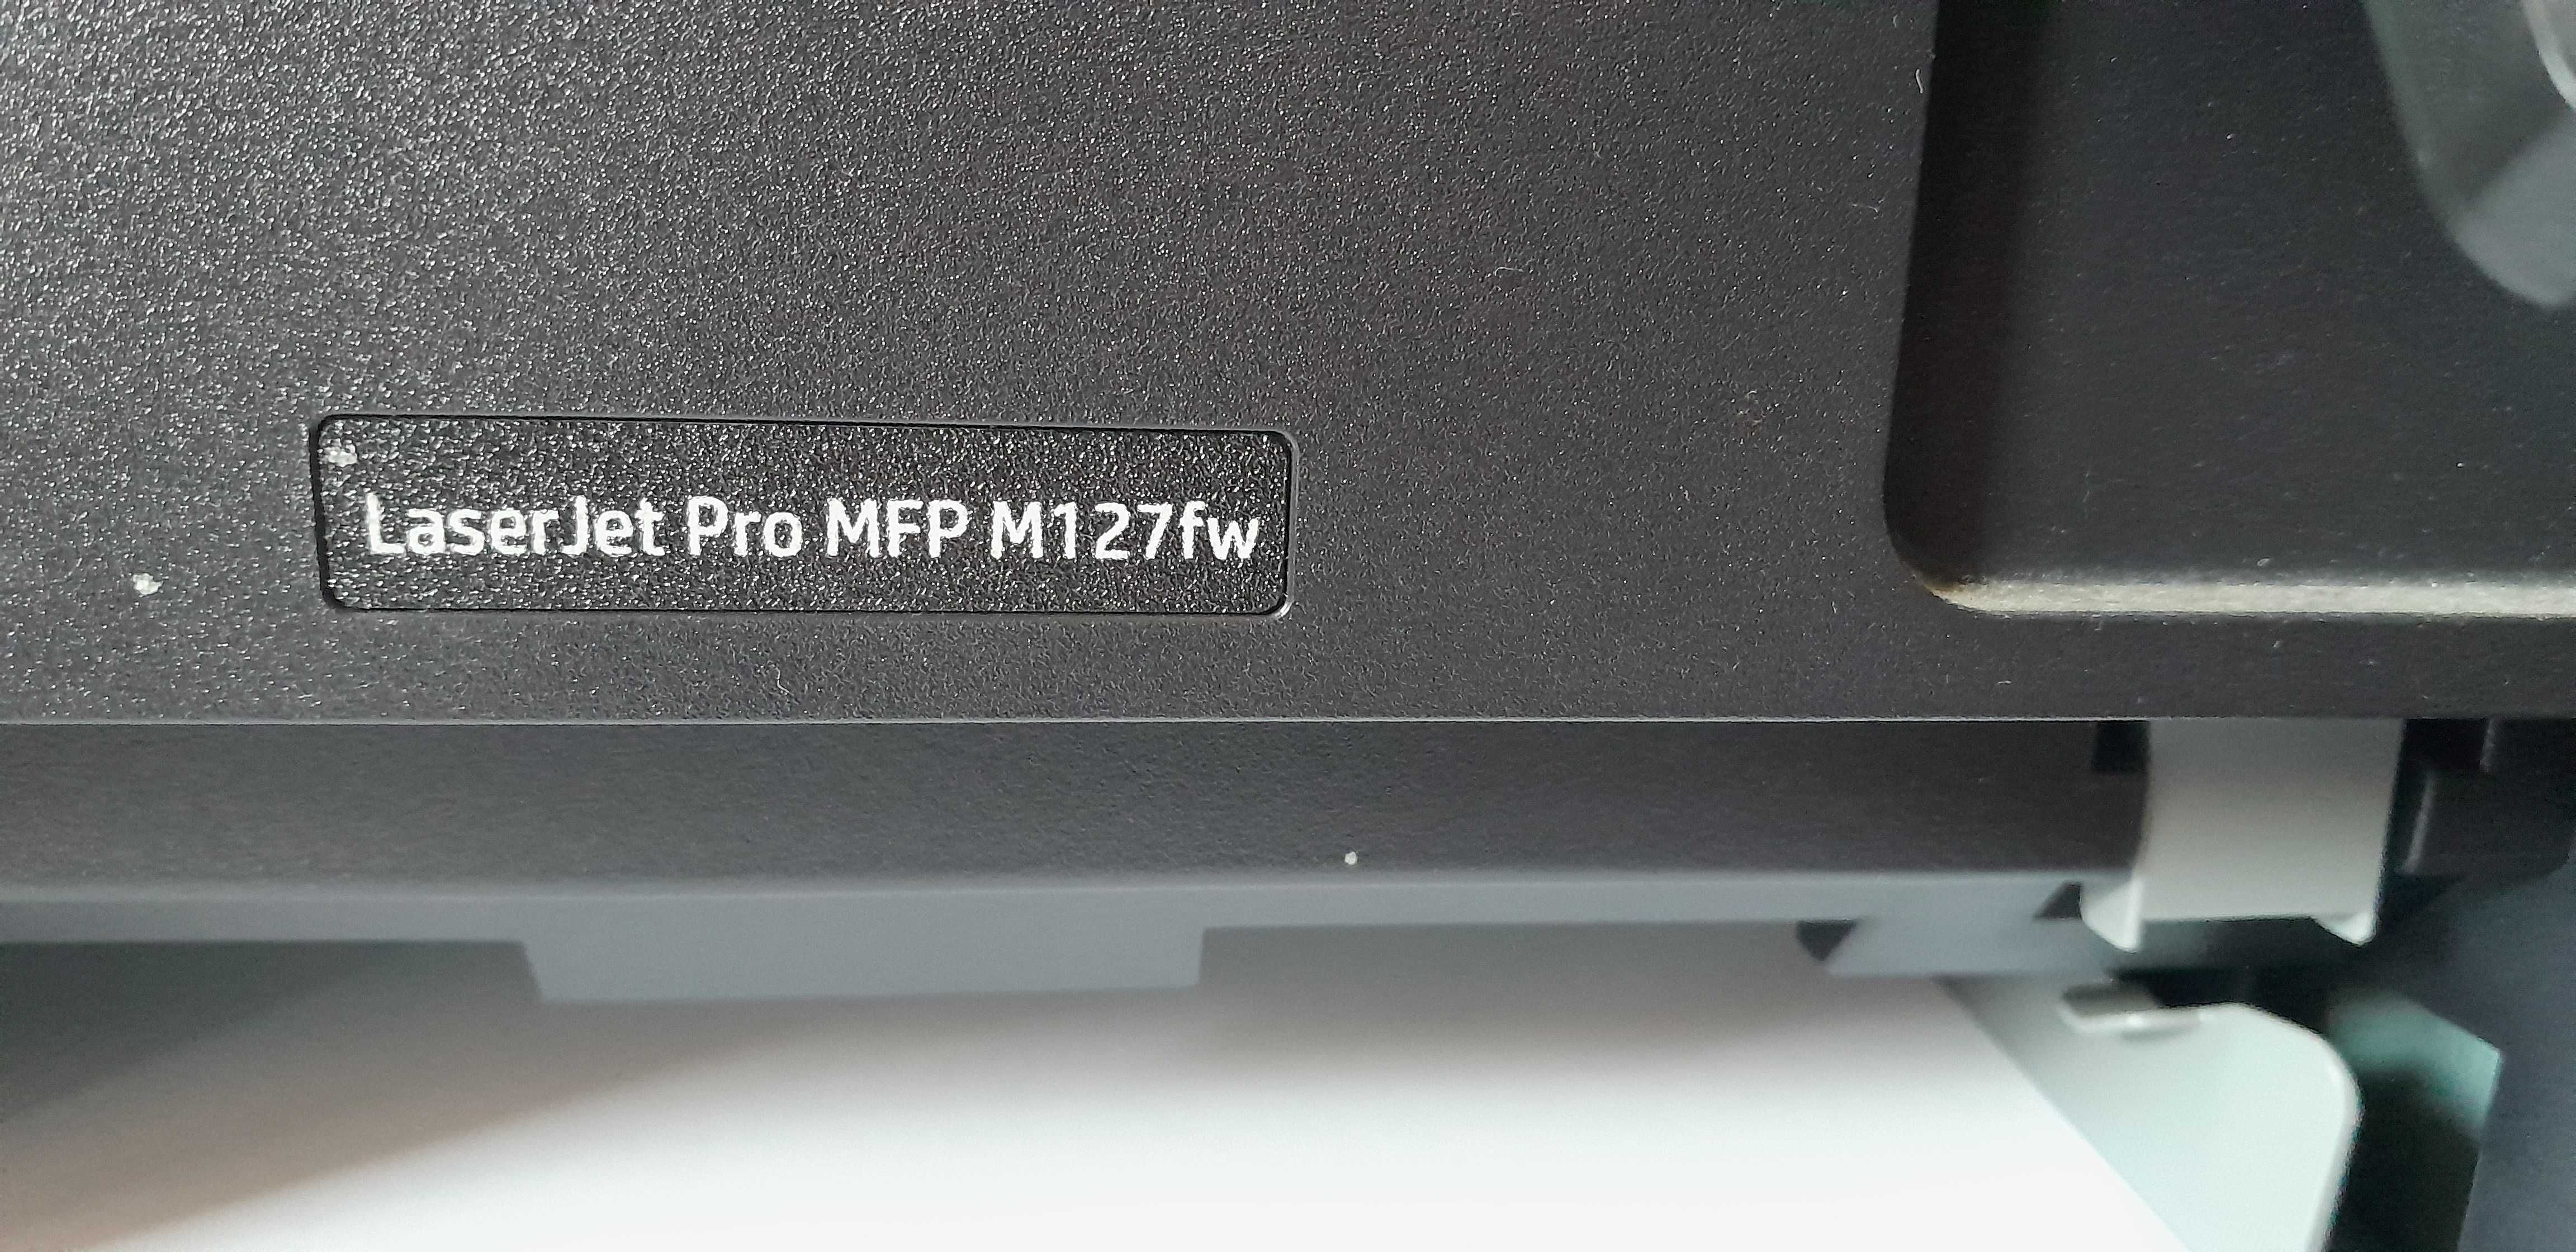 Imprimantă HP alb-negru Laserjet Pro MFP M127fw